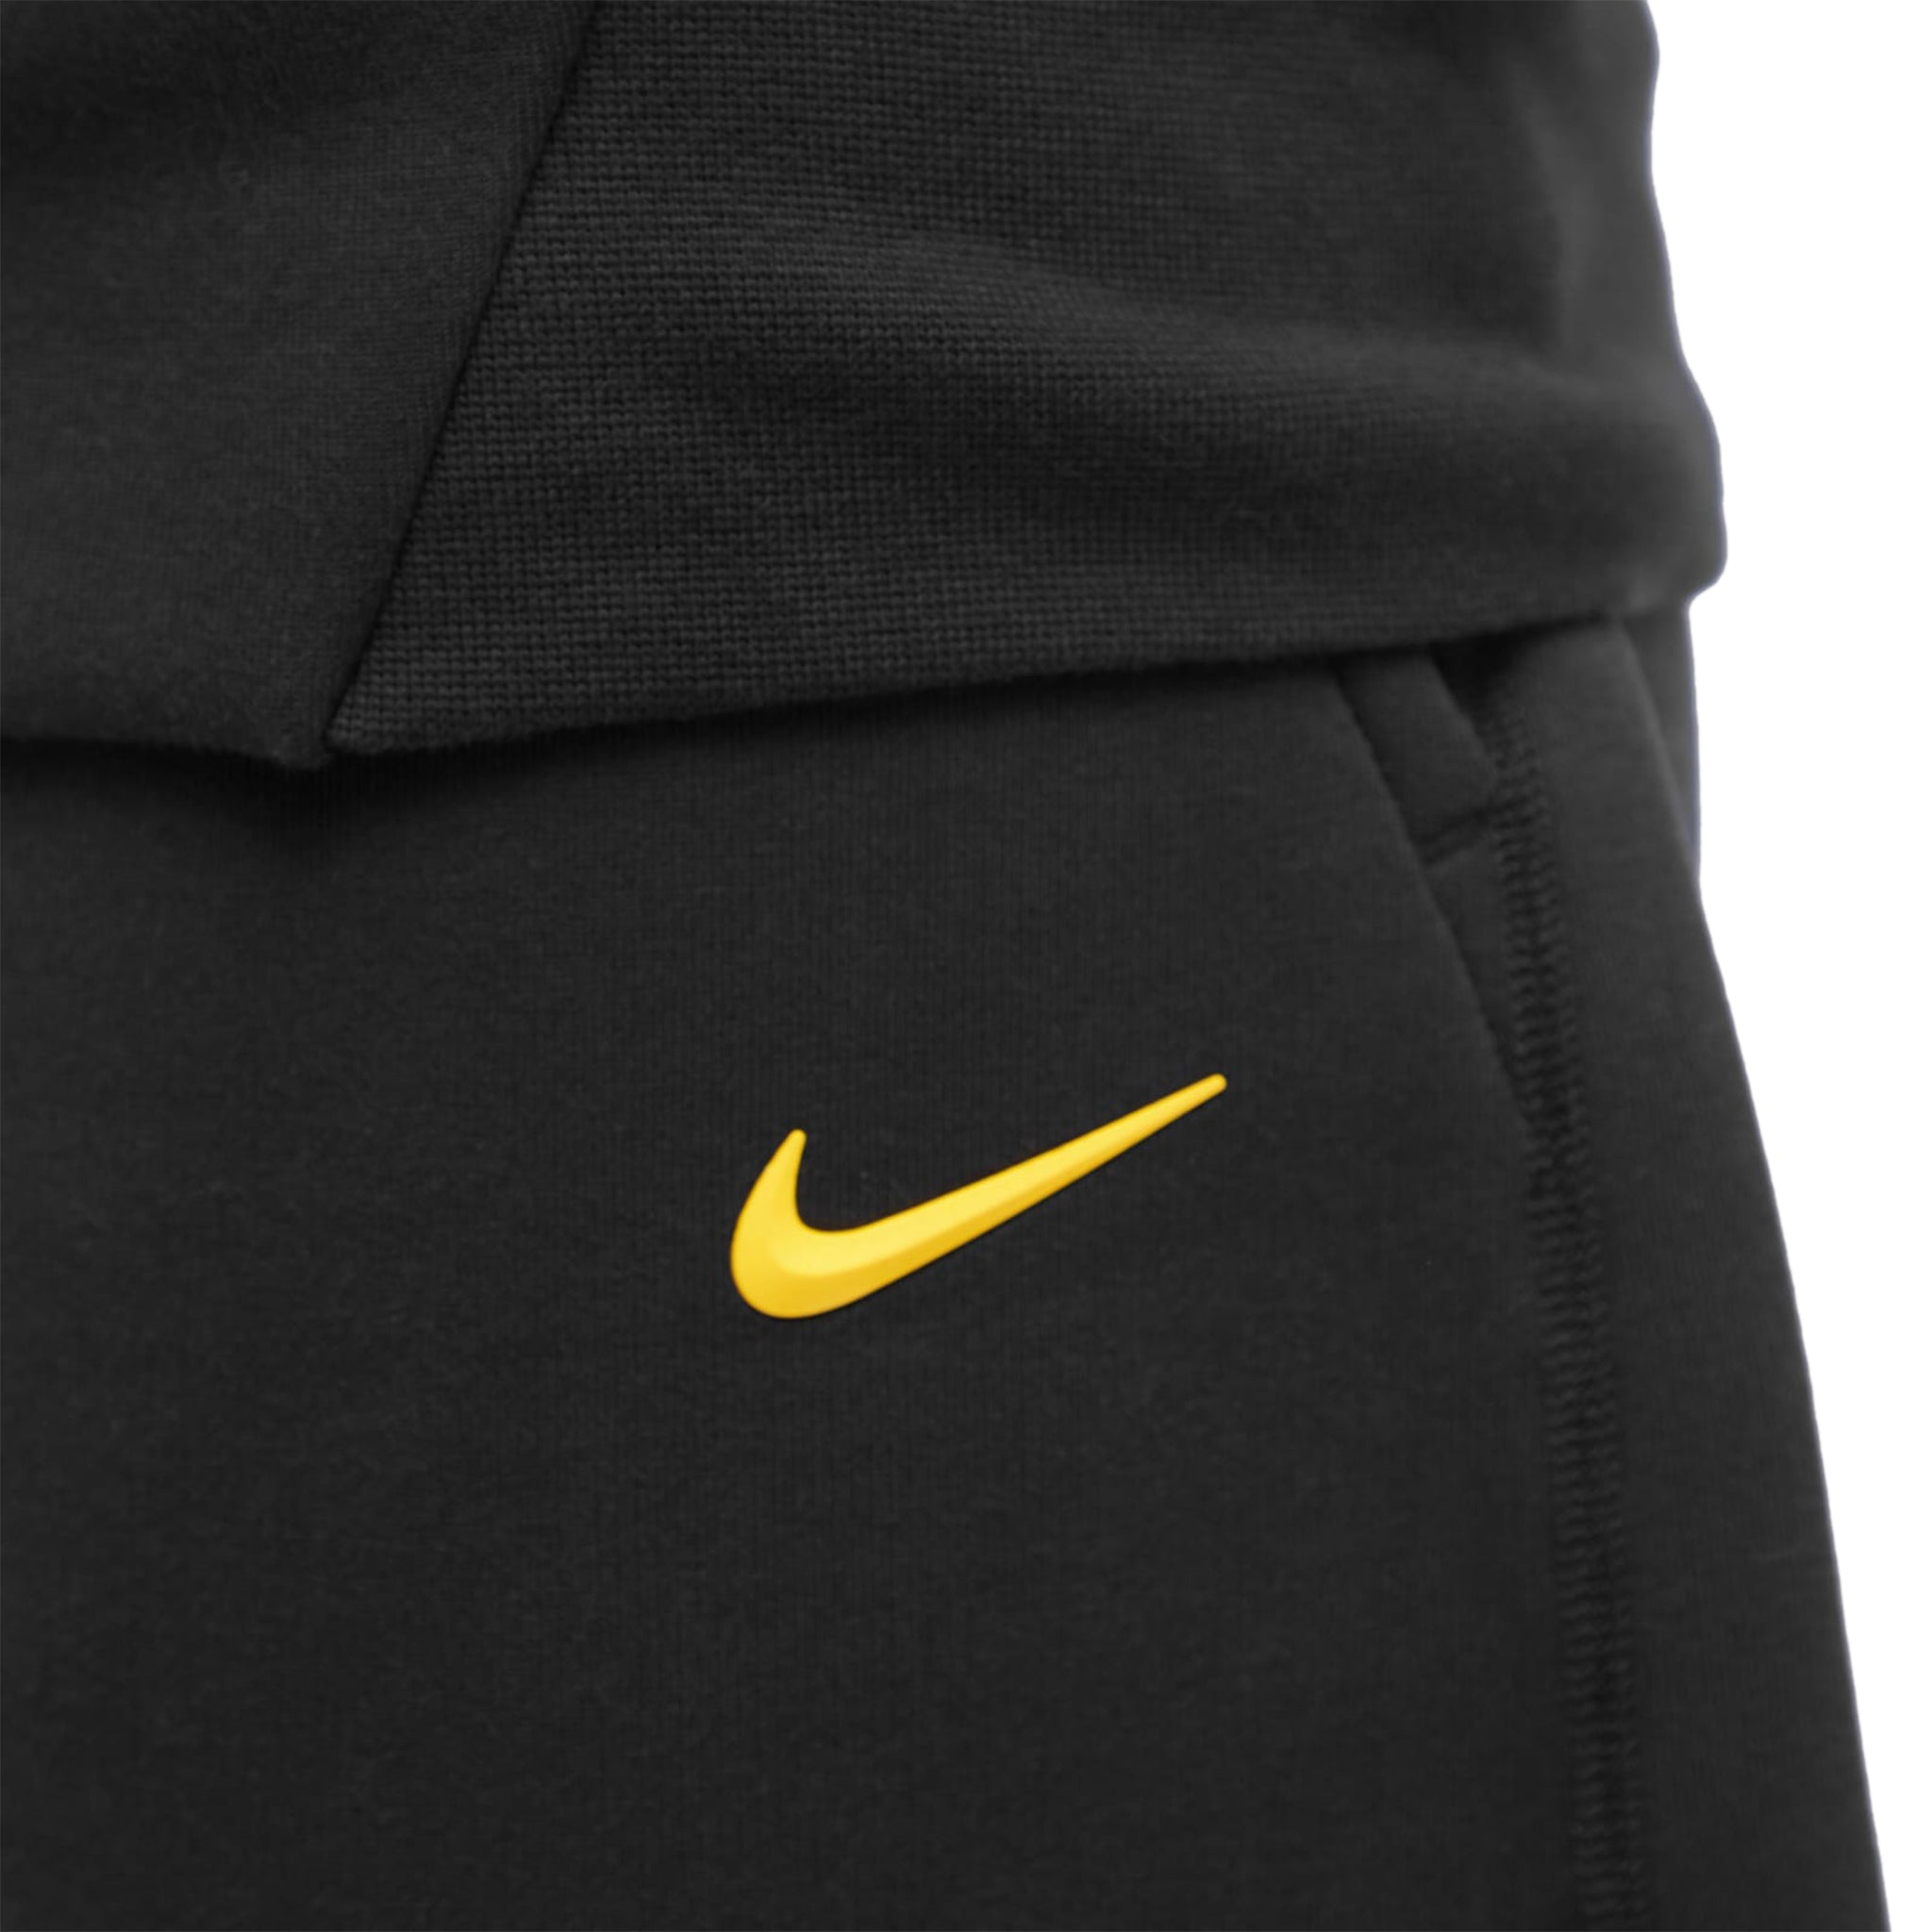 Logo view of Nike x nocta tech fleece black sweatpants FD8460-010